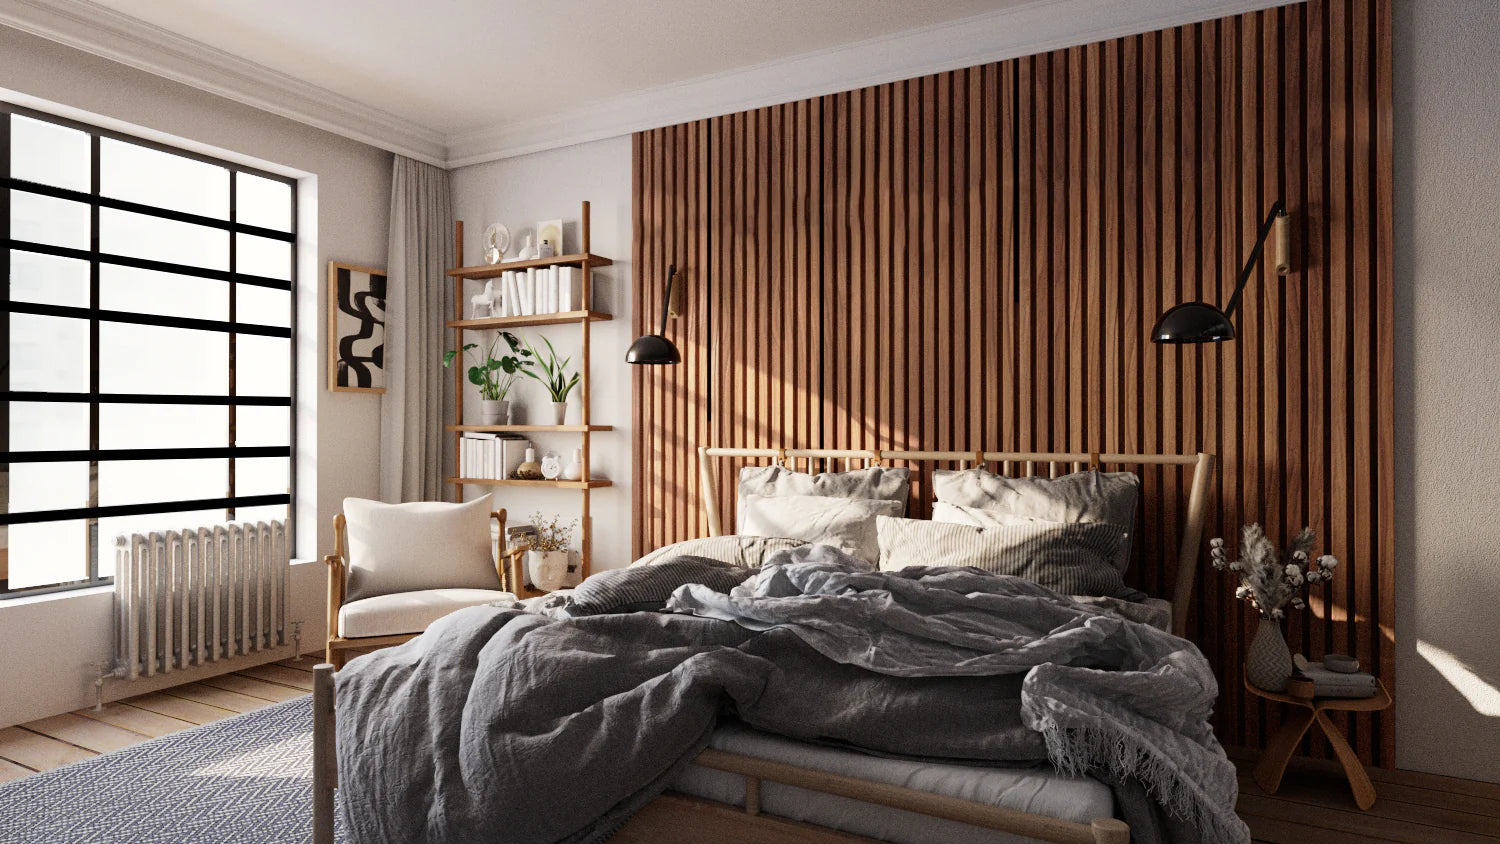 wood slat walls in a bedroom